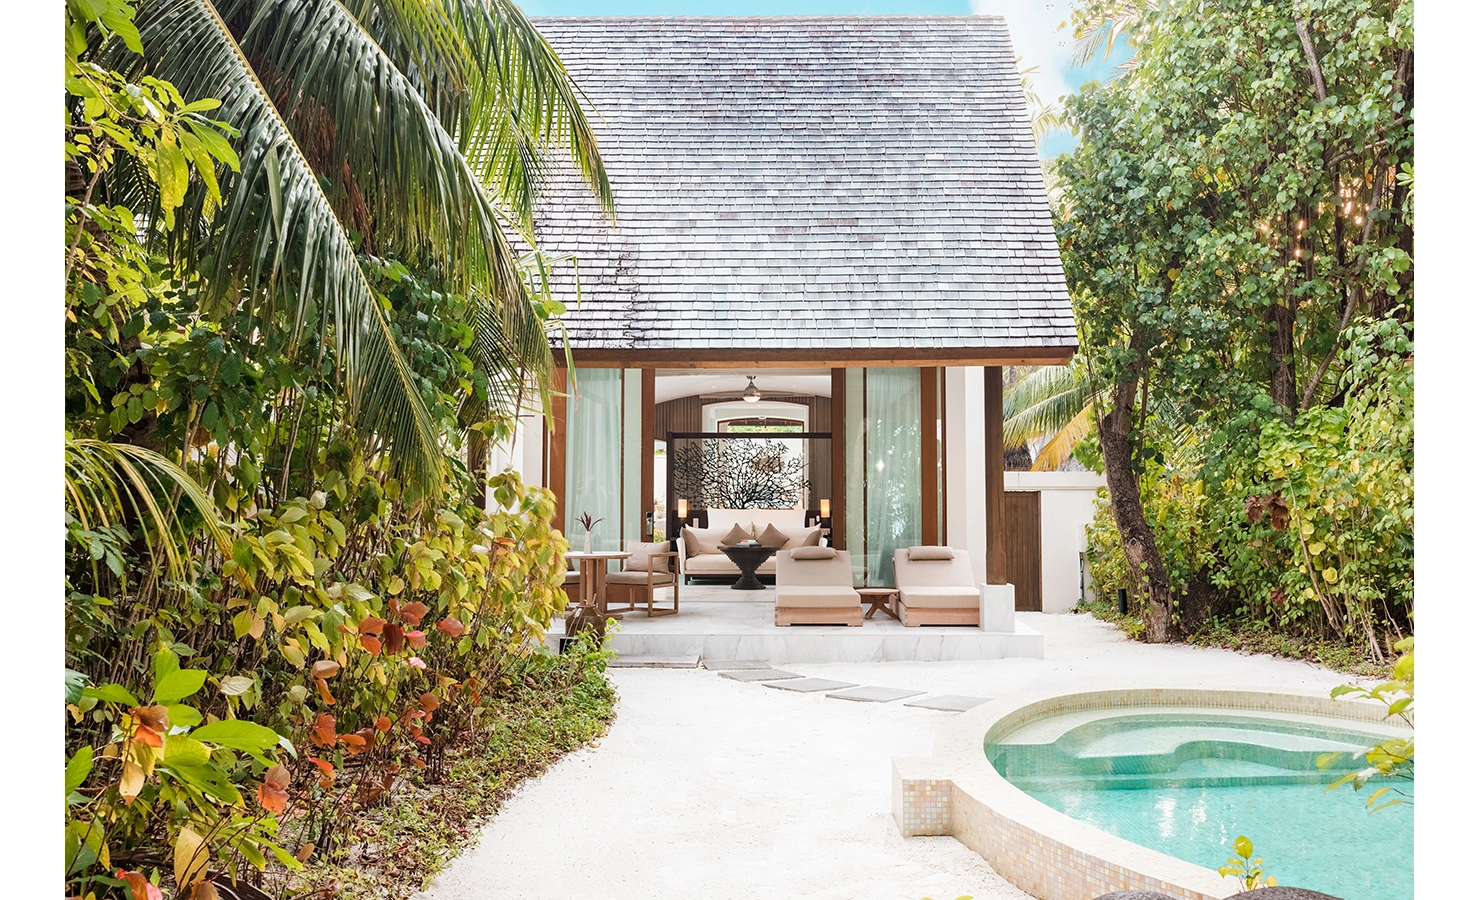 Perfect Hideaways, Conrad Maldives Luxury accomodation house entrance view